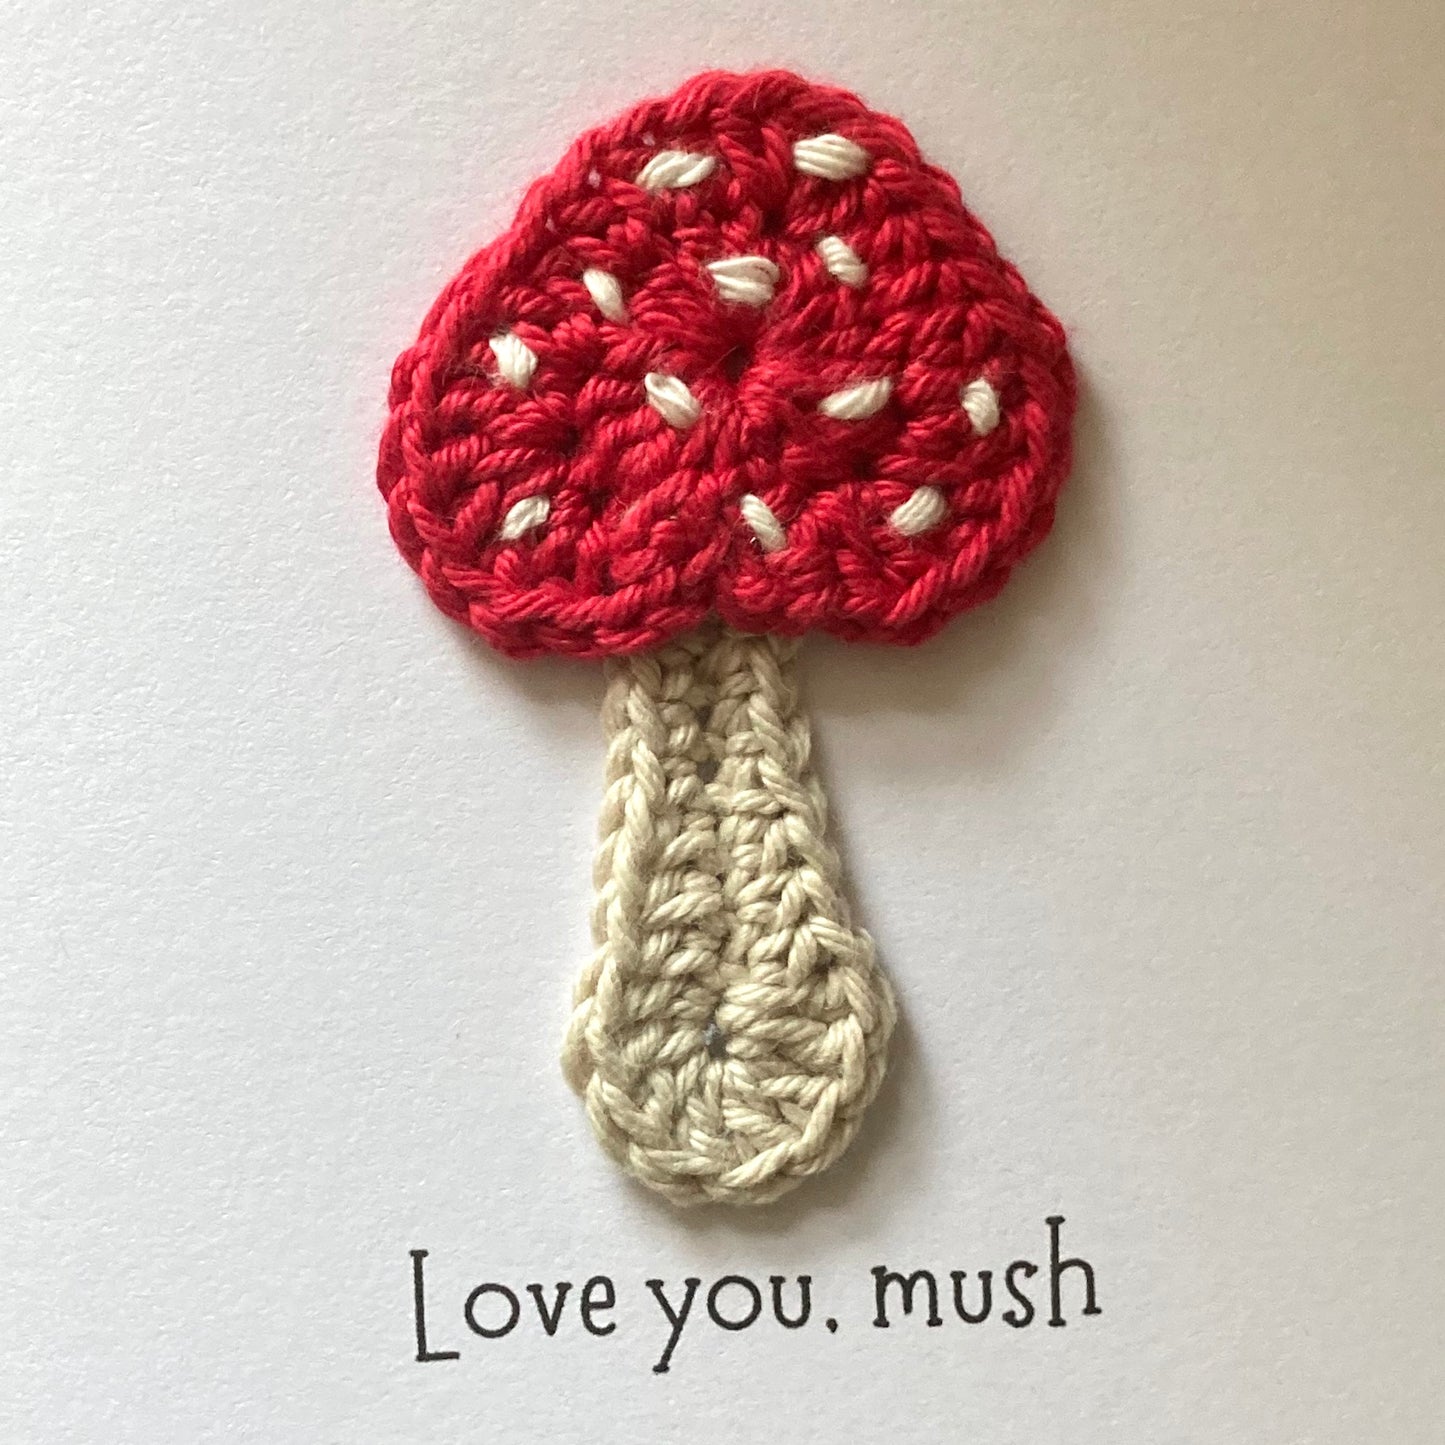 Mushroom Crochet Card - Handmade Pun Card